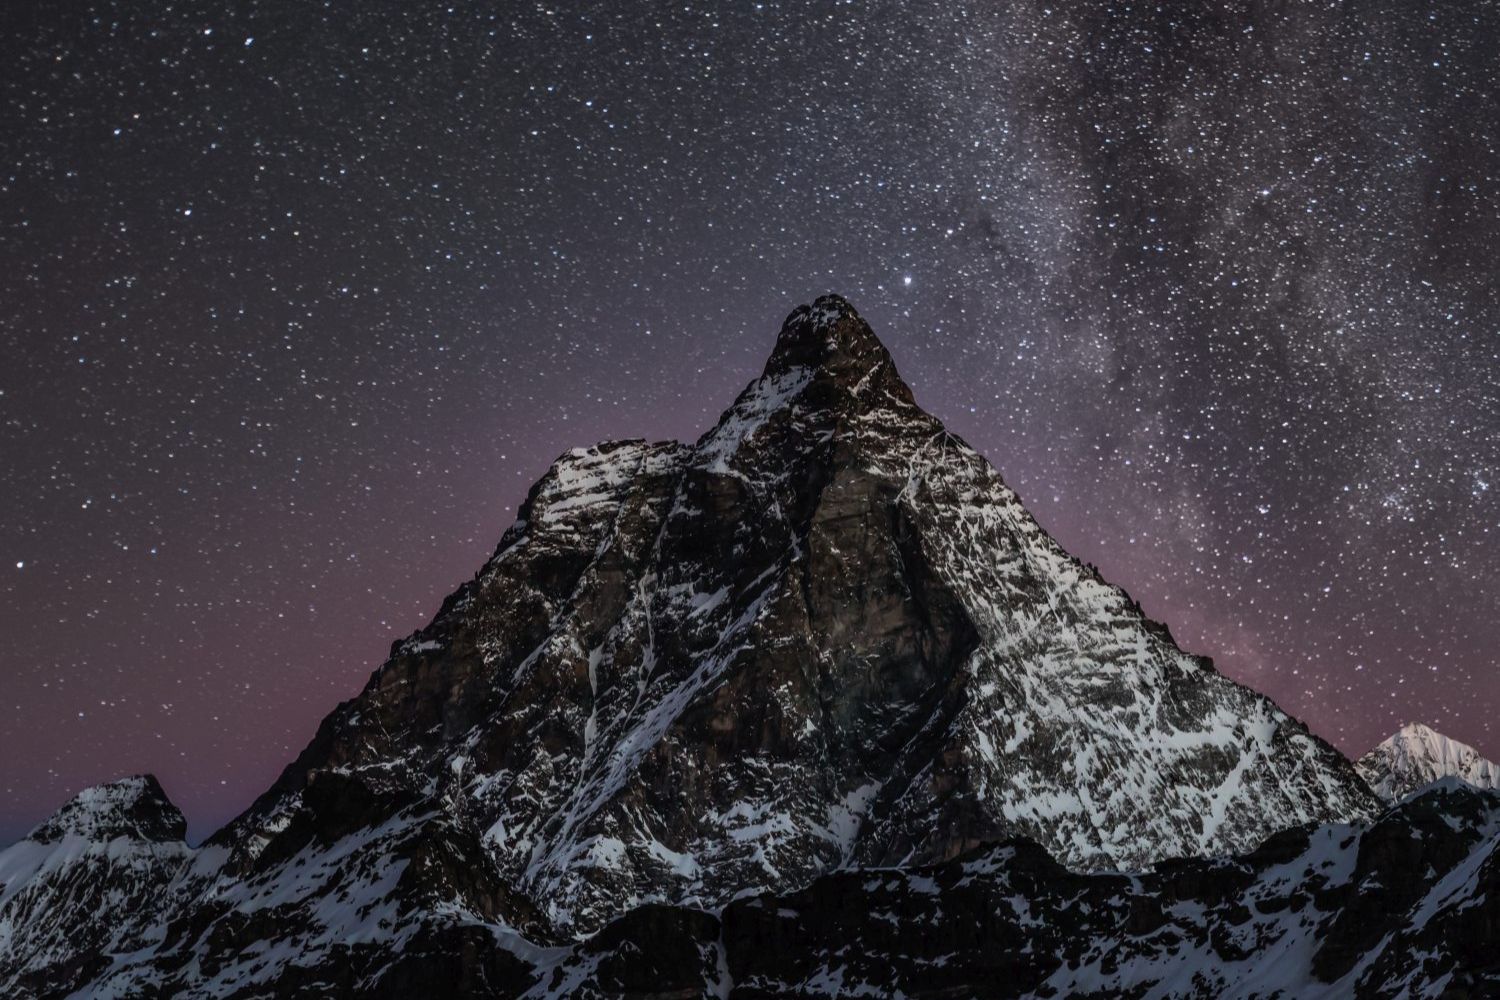 Cluster of stars over the Matterhorn, Italy